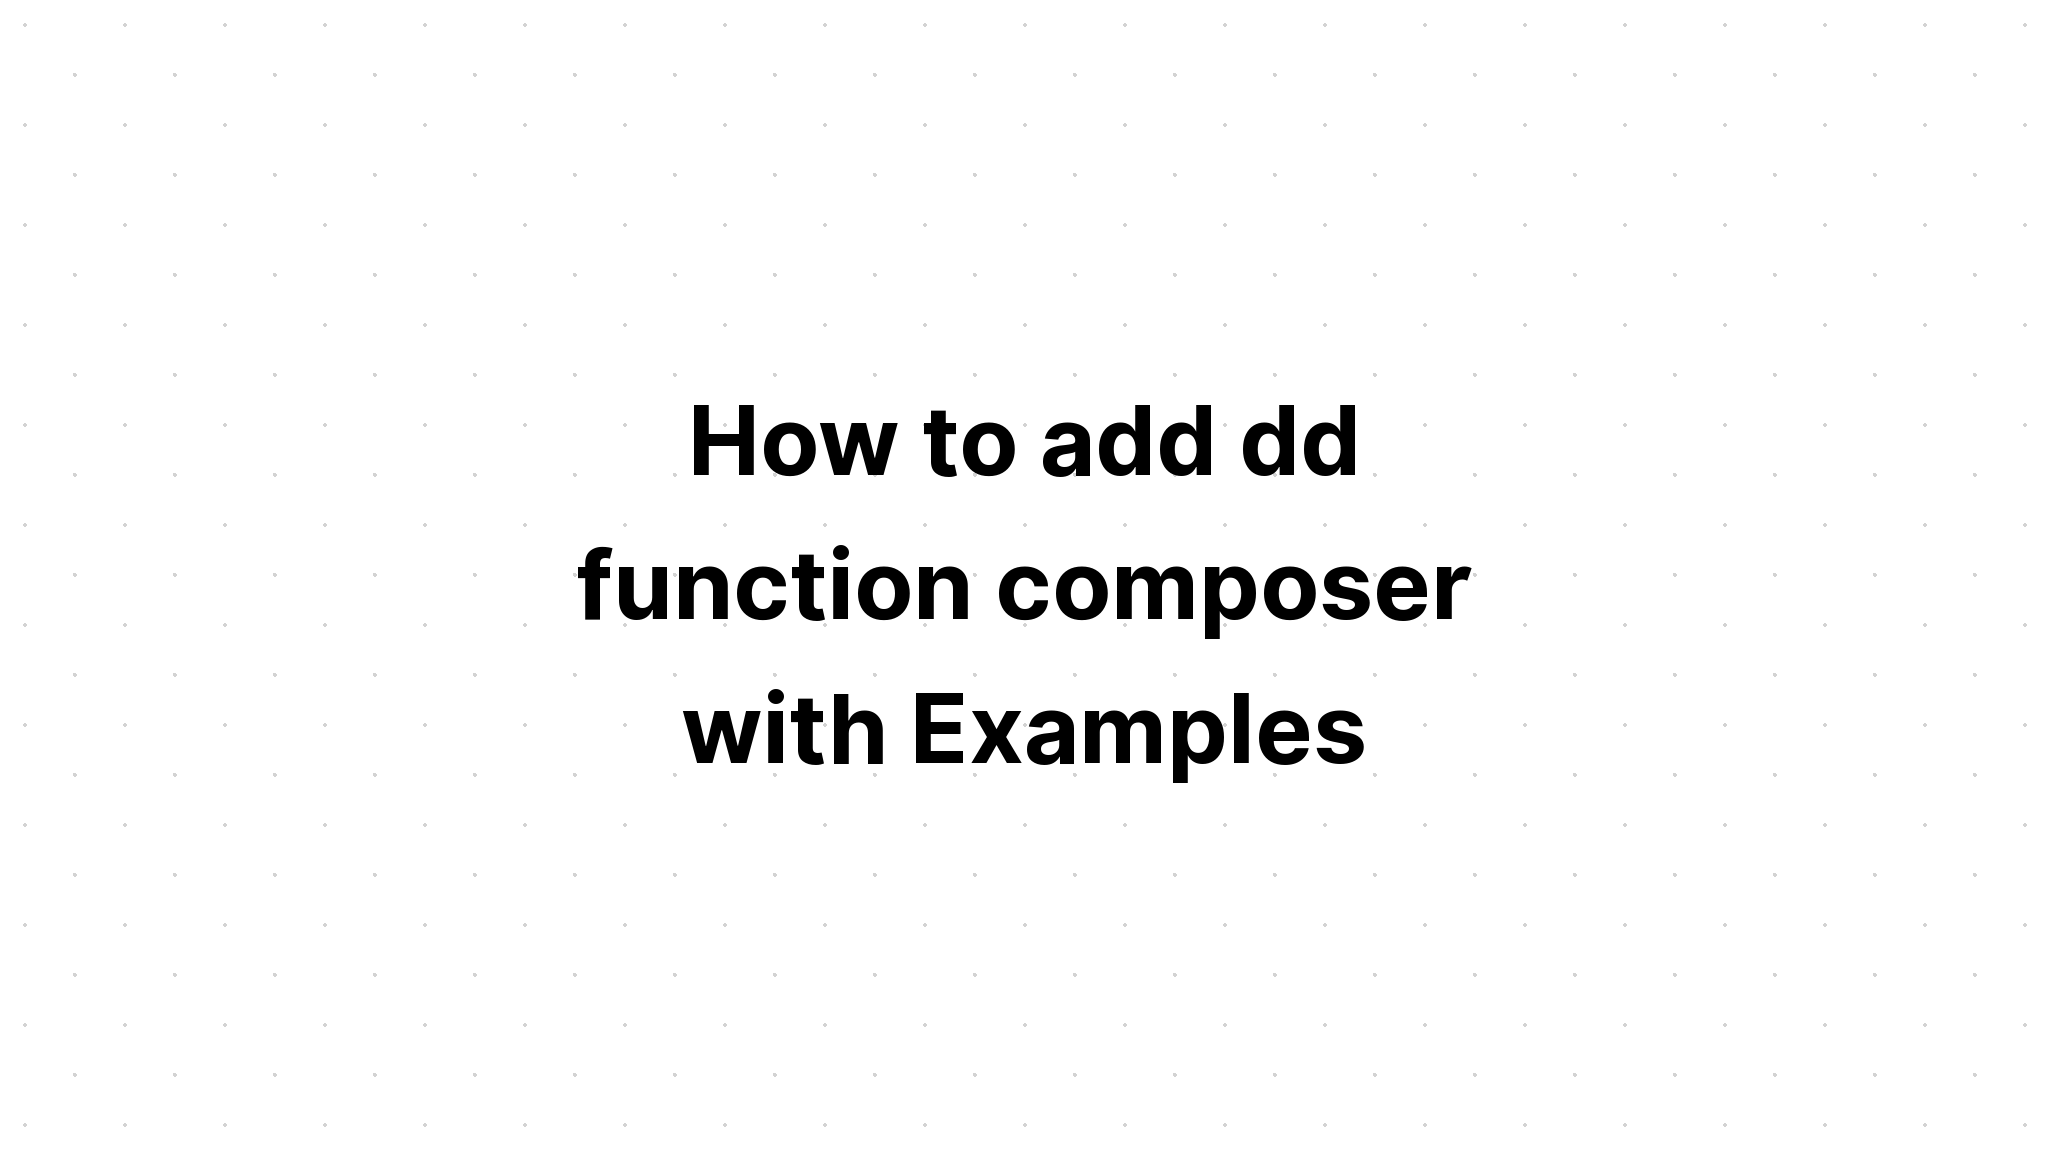 Bagaimana cara menambahkan komposer fungsi dd dengan Contoh